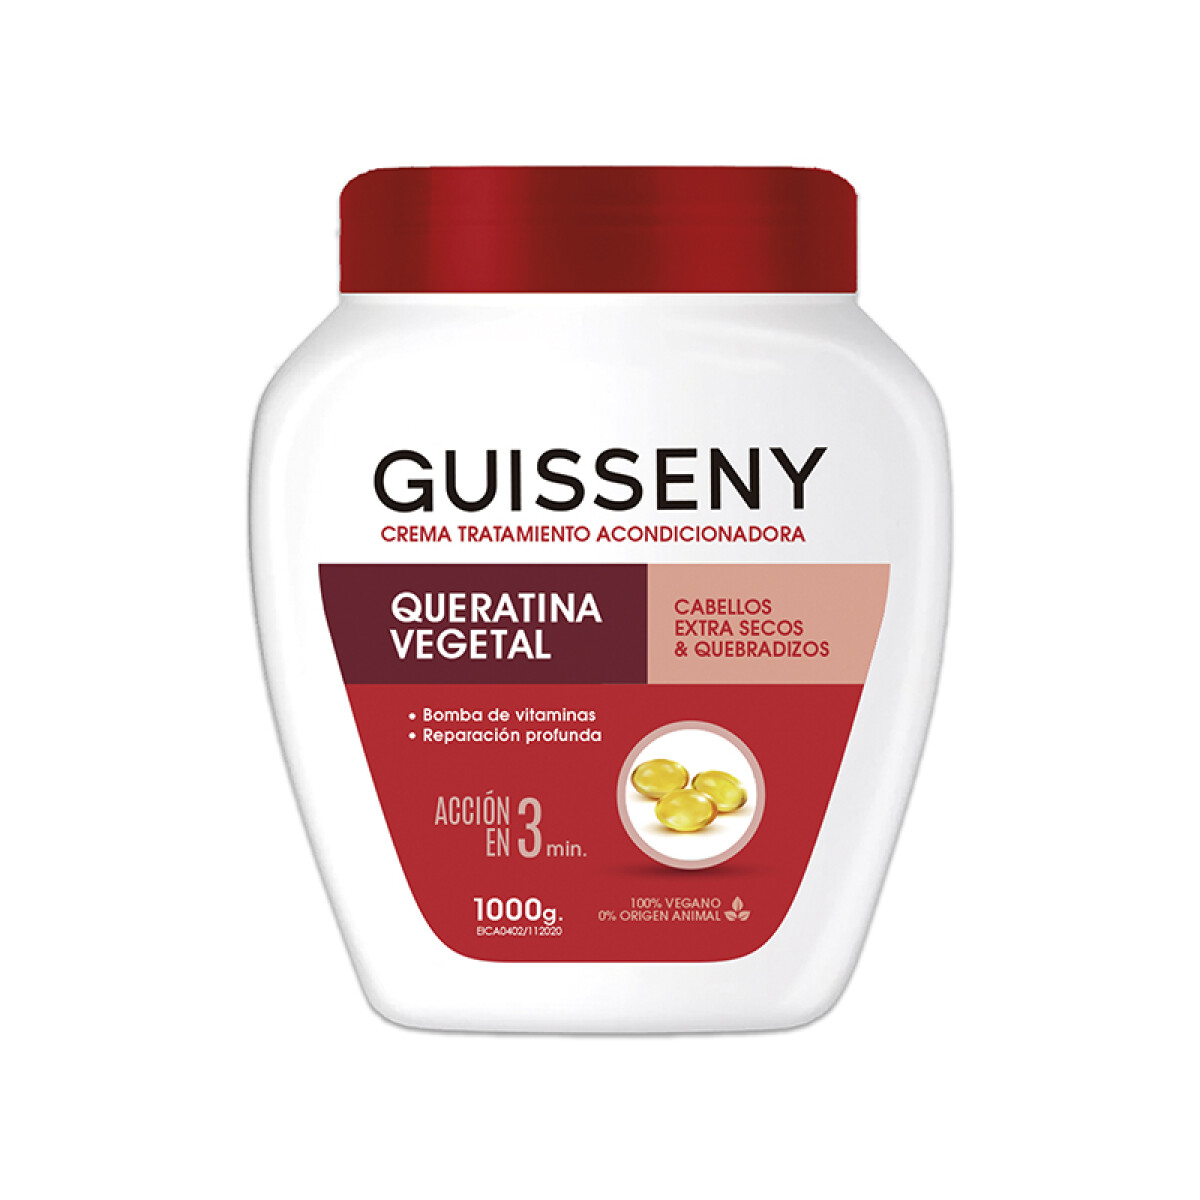 Crema tratamiento capilar 1000 g Guisseny - Queratina vegetal 